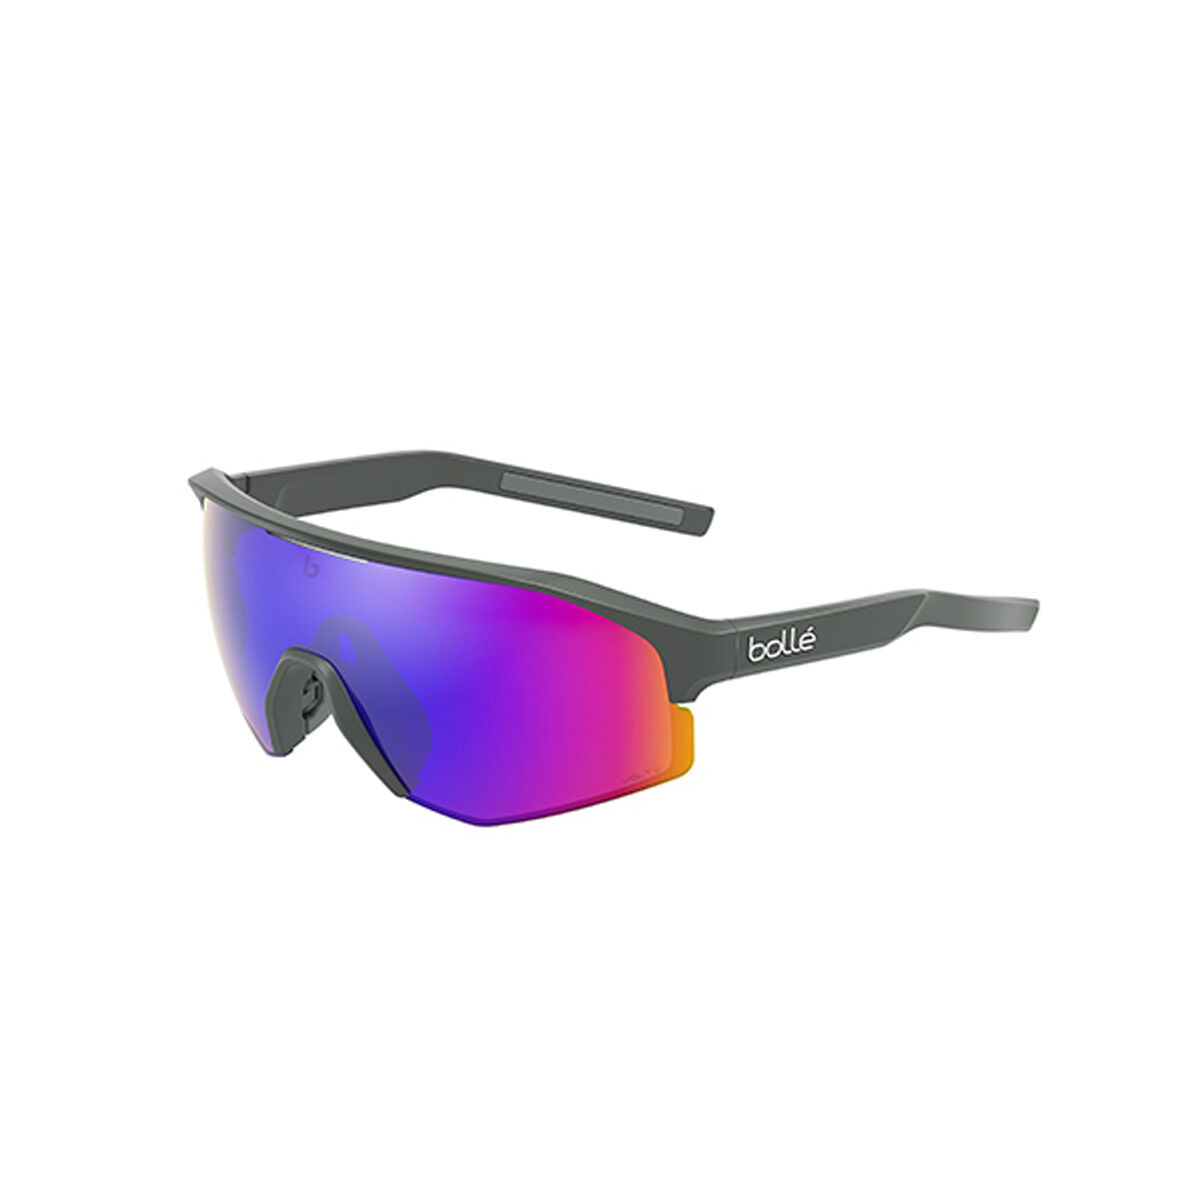 Bollé LIGHTSHIFTER XL Cycling Sunglasses - Photochromic Lenses 